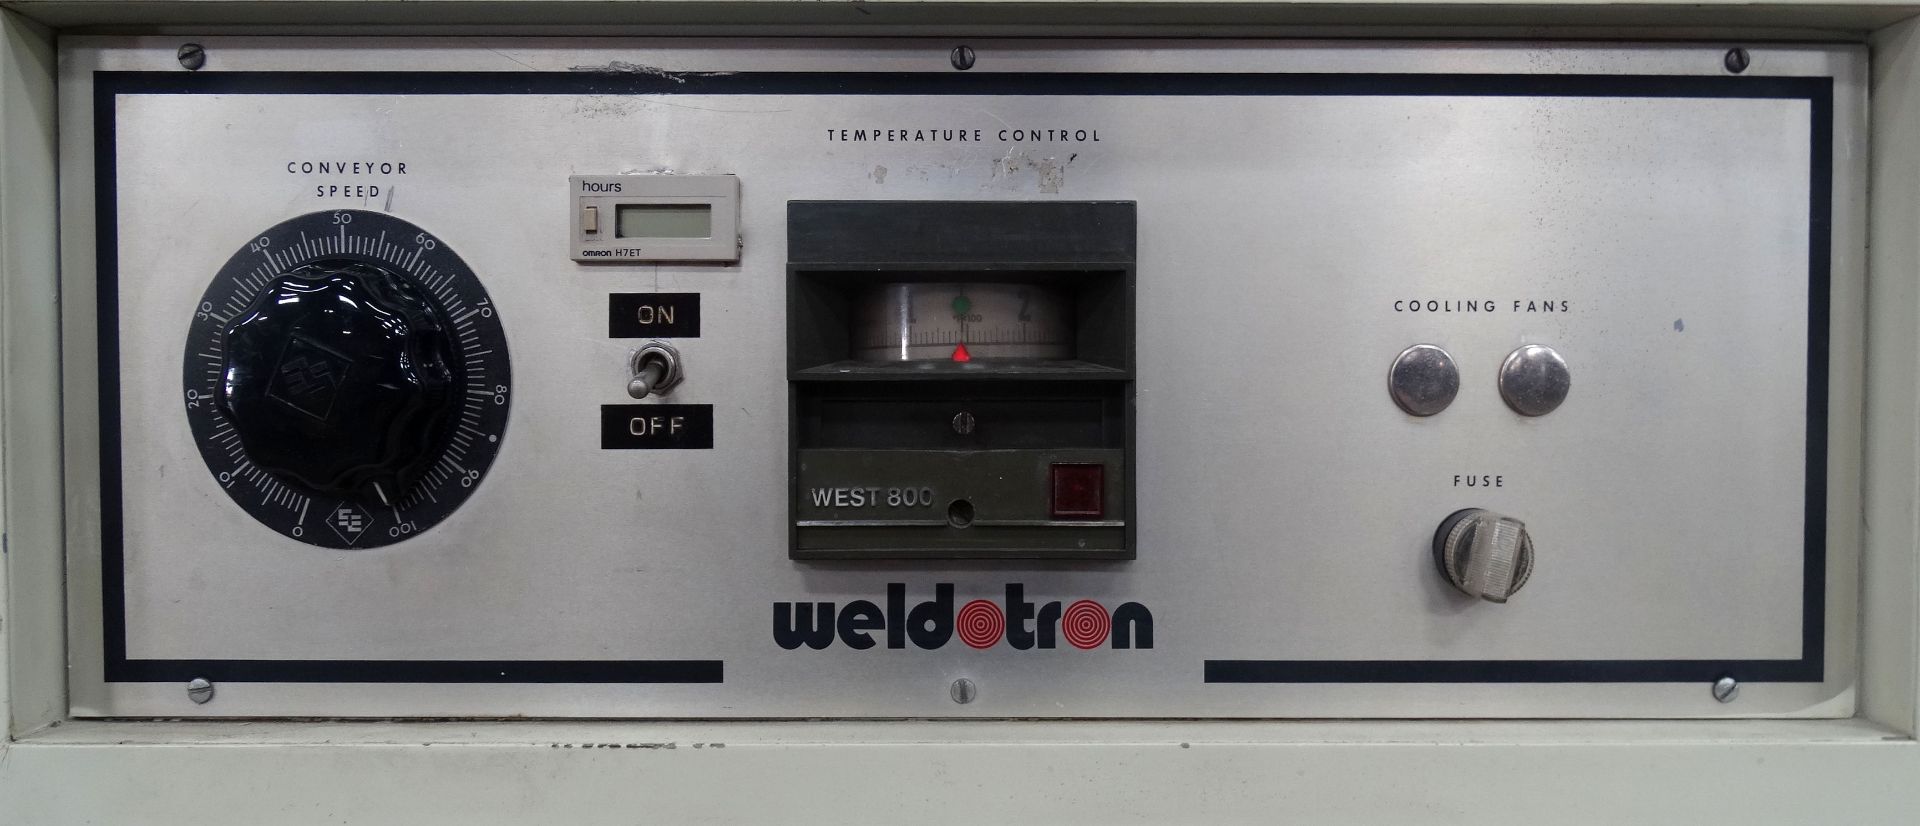 Weldotron Heat Shrink Tunnel 14" Wide x 6" Tall - Image 5 of 5